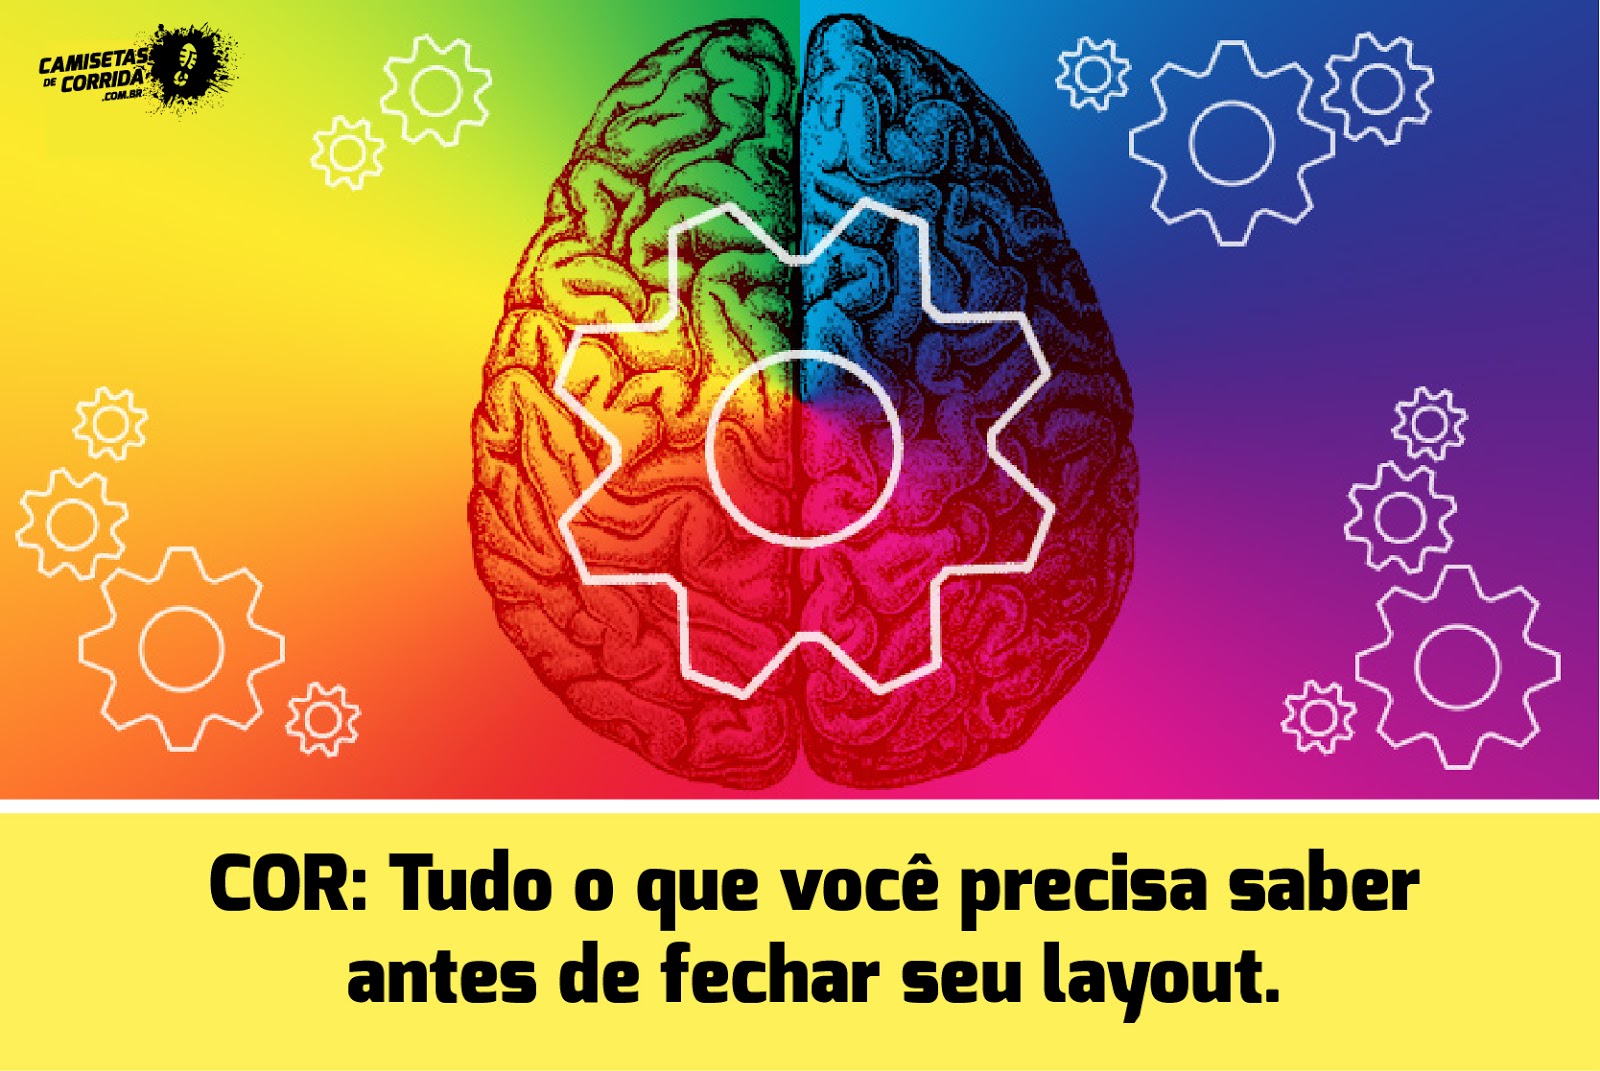 Colored brains. Разноцветный мозг. Мозг психология. Творческое полушарие мозга. Креативный мозг.